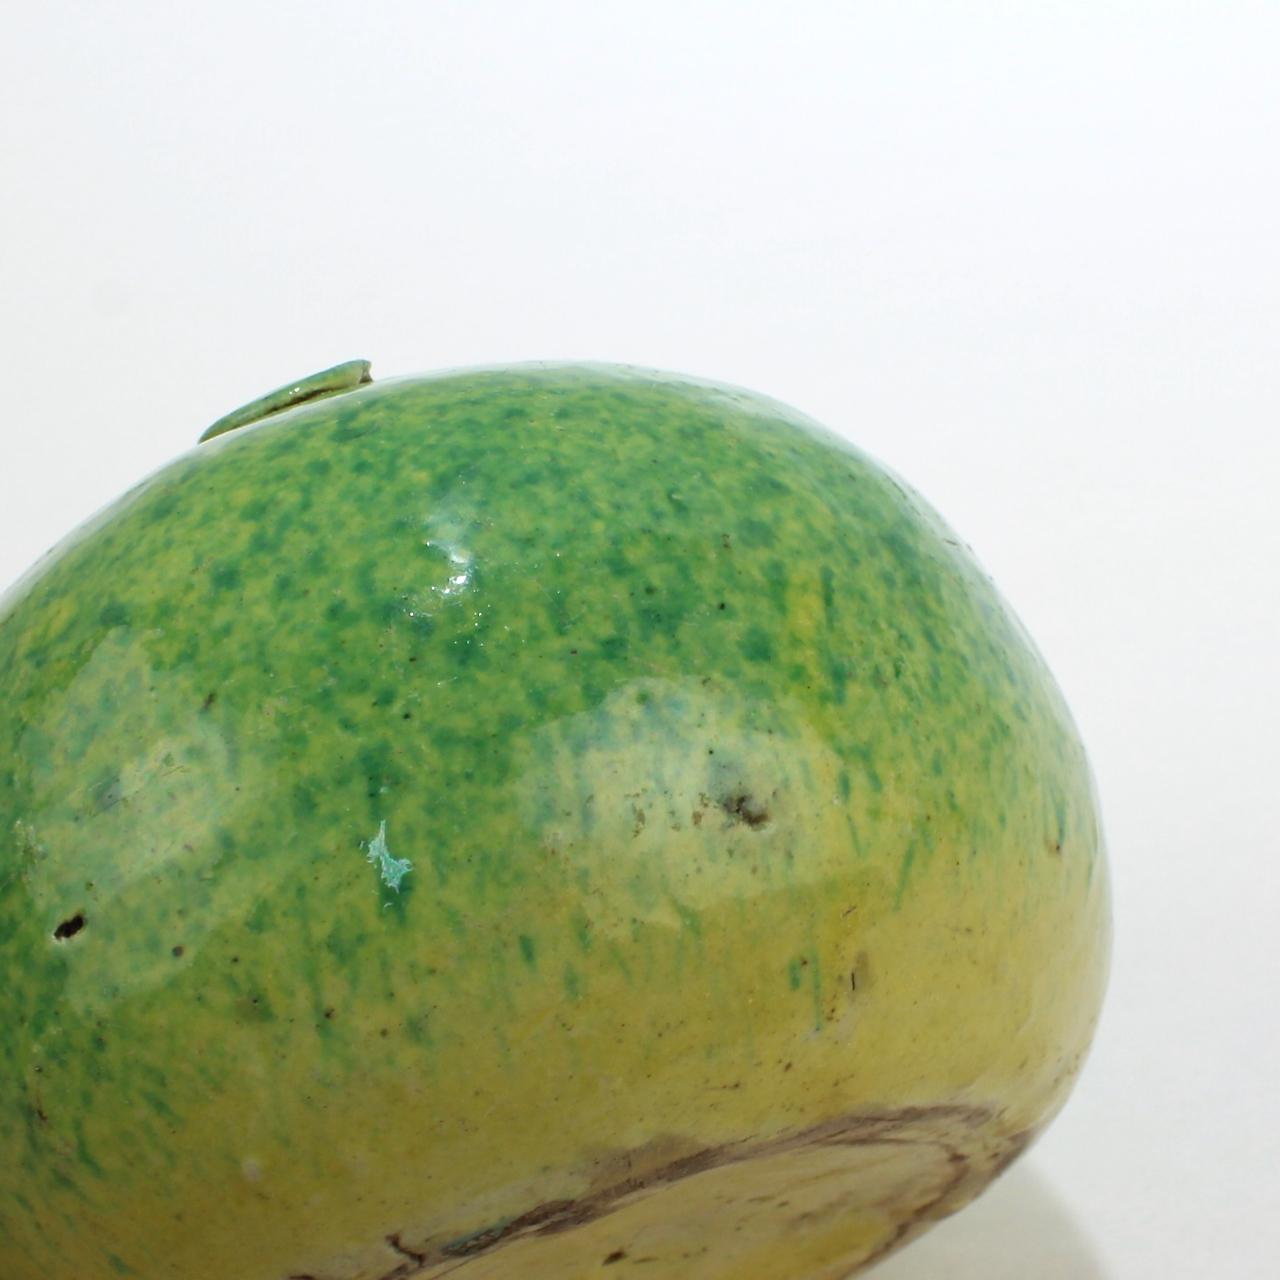 Antique Chinese Export Porcelain Green Apple Altar Fruit Ex-Gutfreund Collection 5